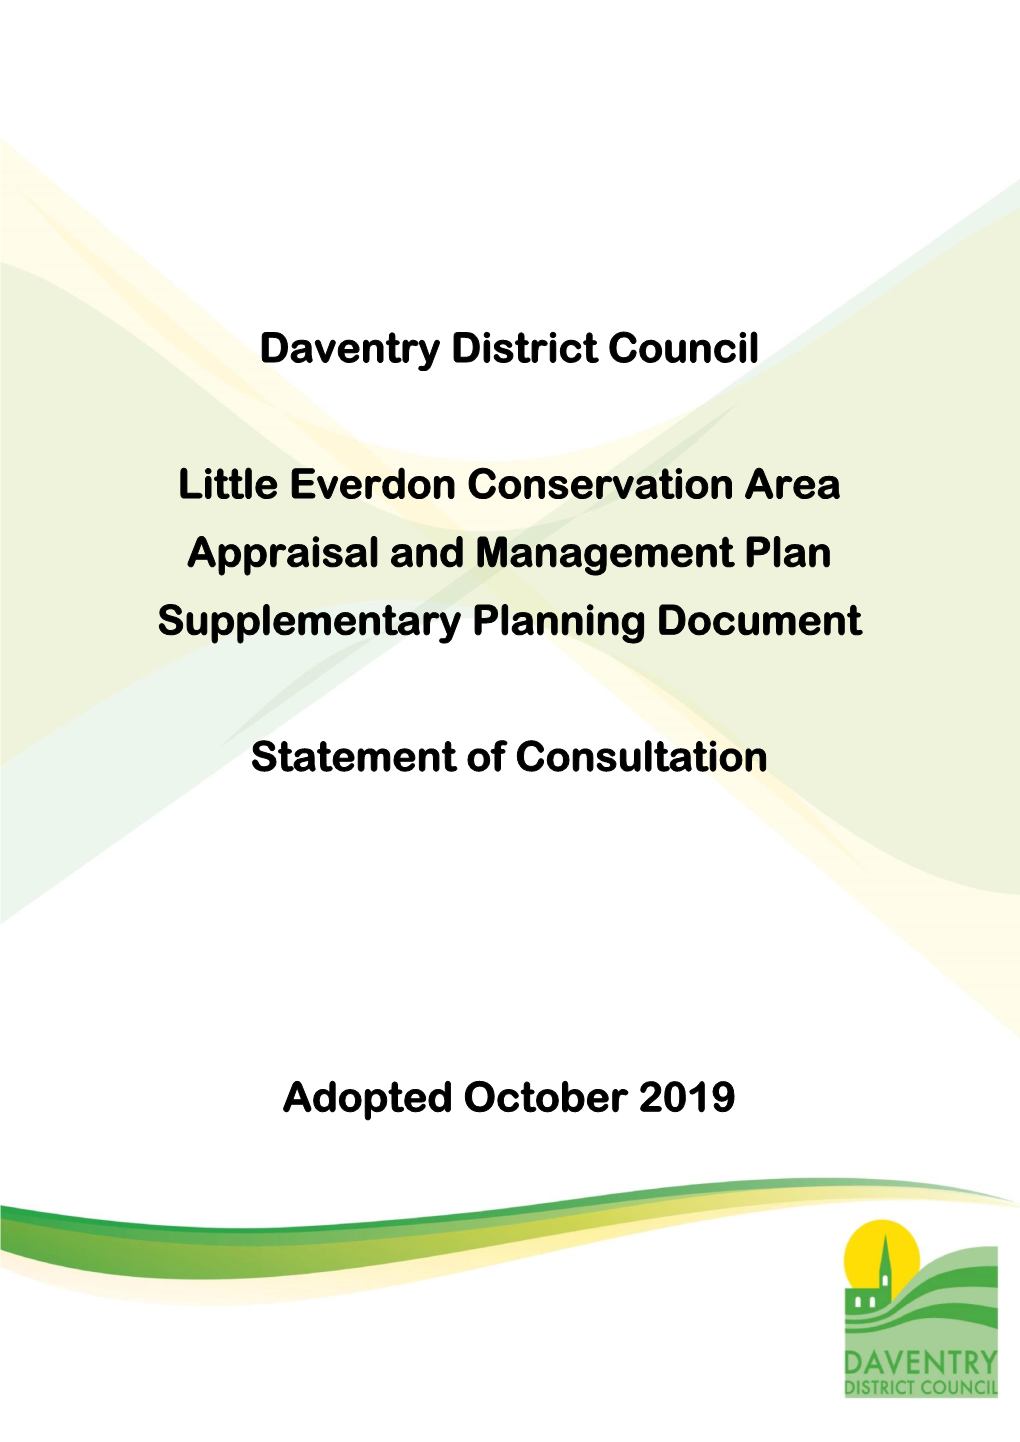 Little Everdon Statement of Consultation